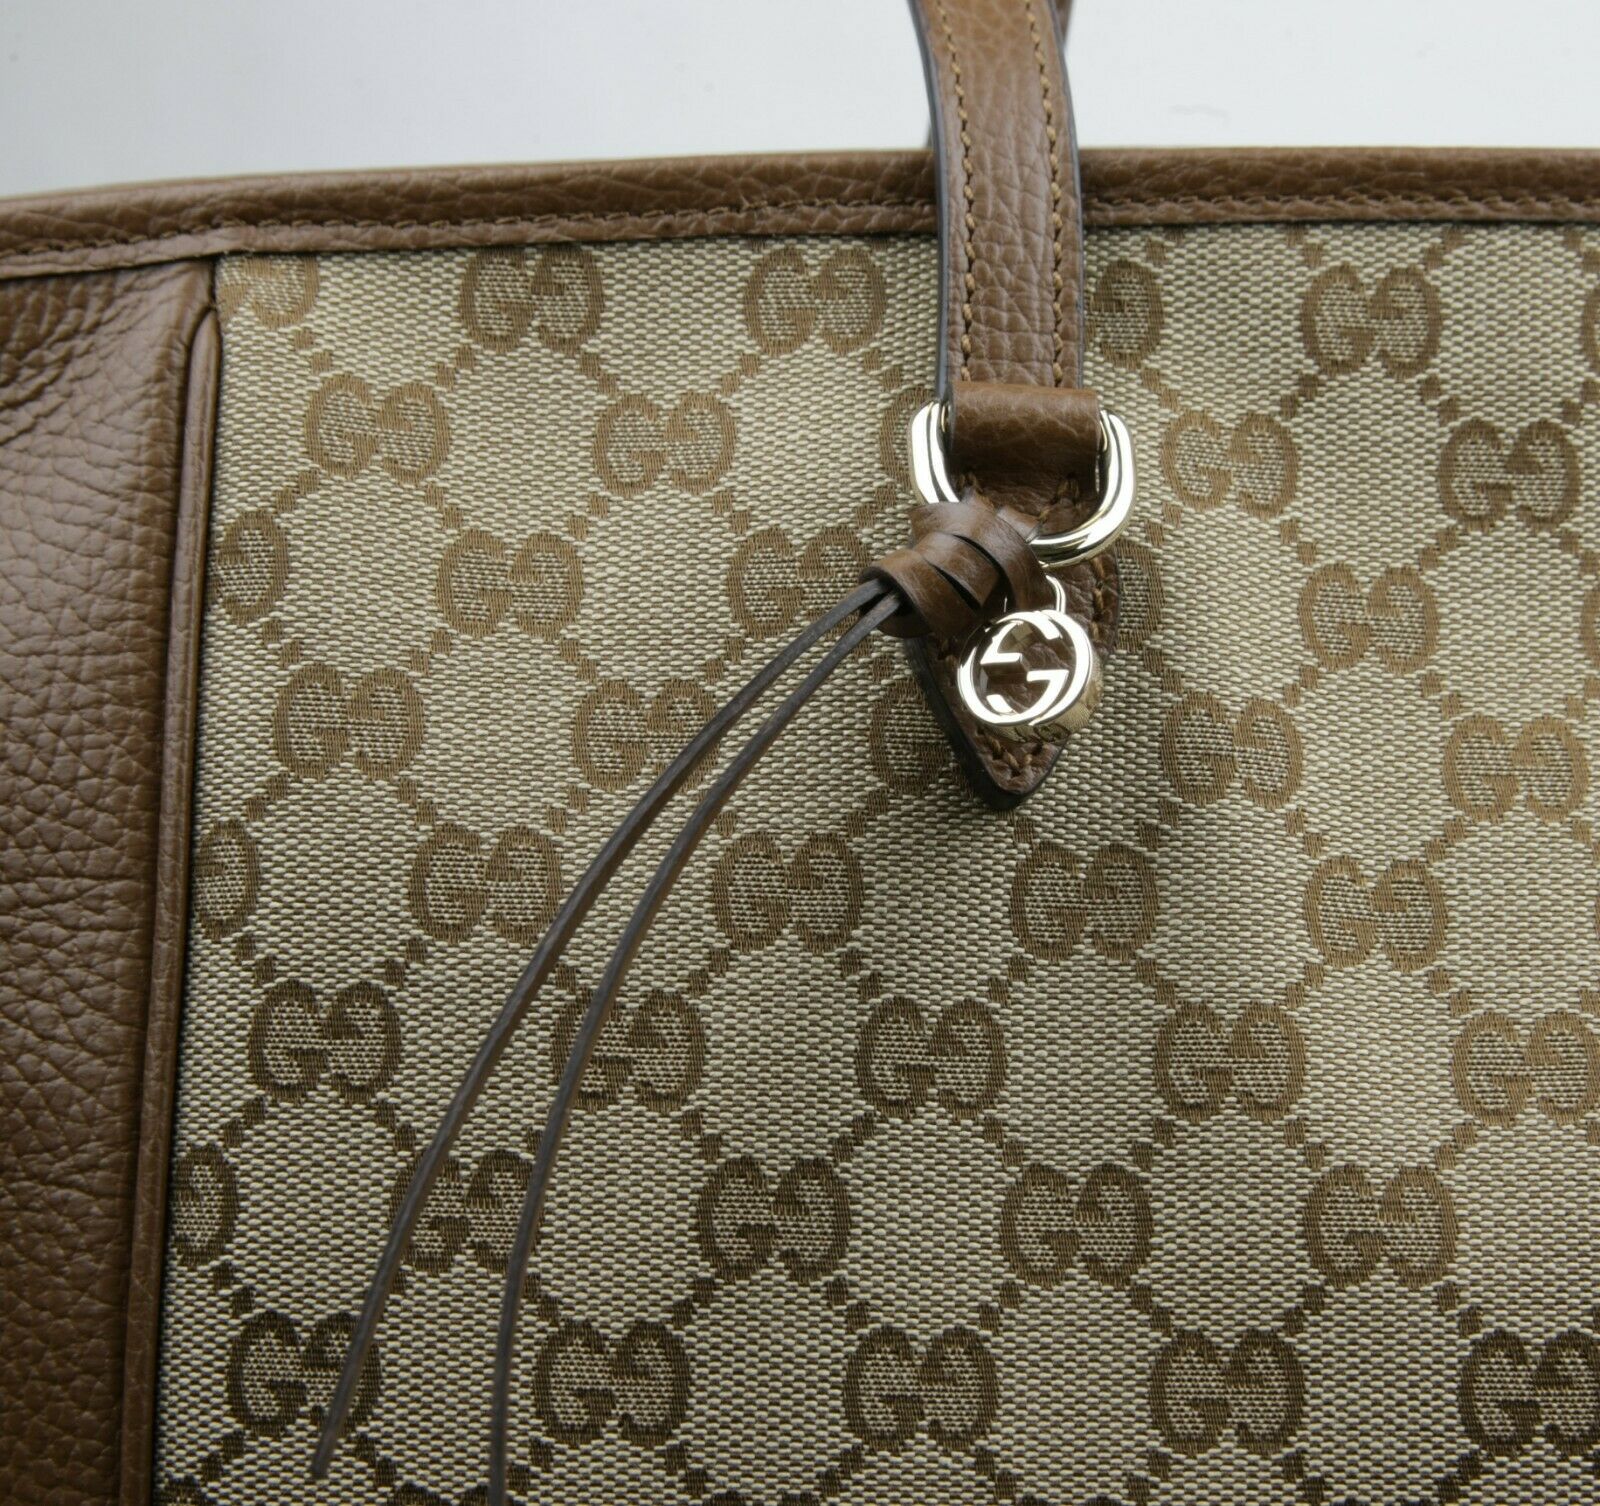 Gucci Original GG Bree Canvas Leather Hobo Handbag